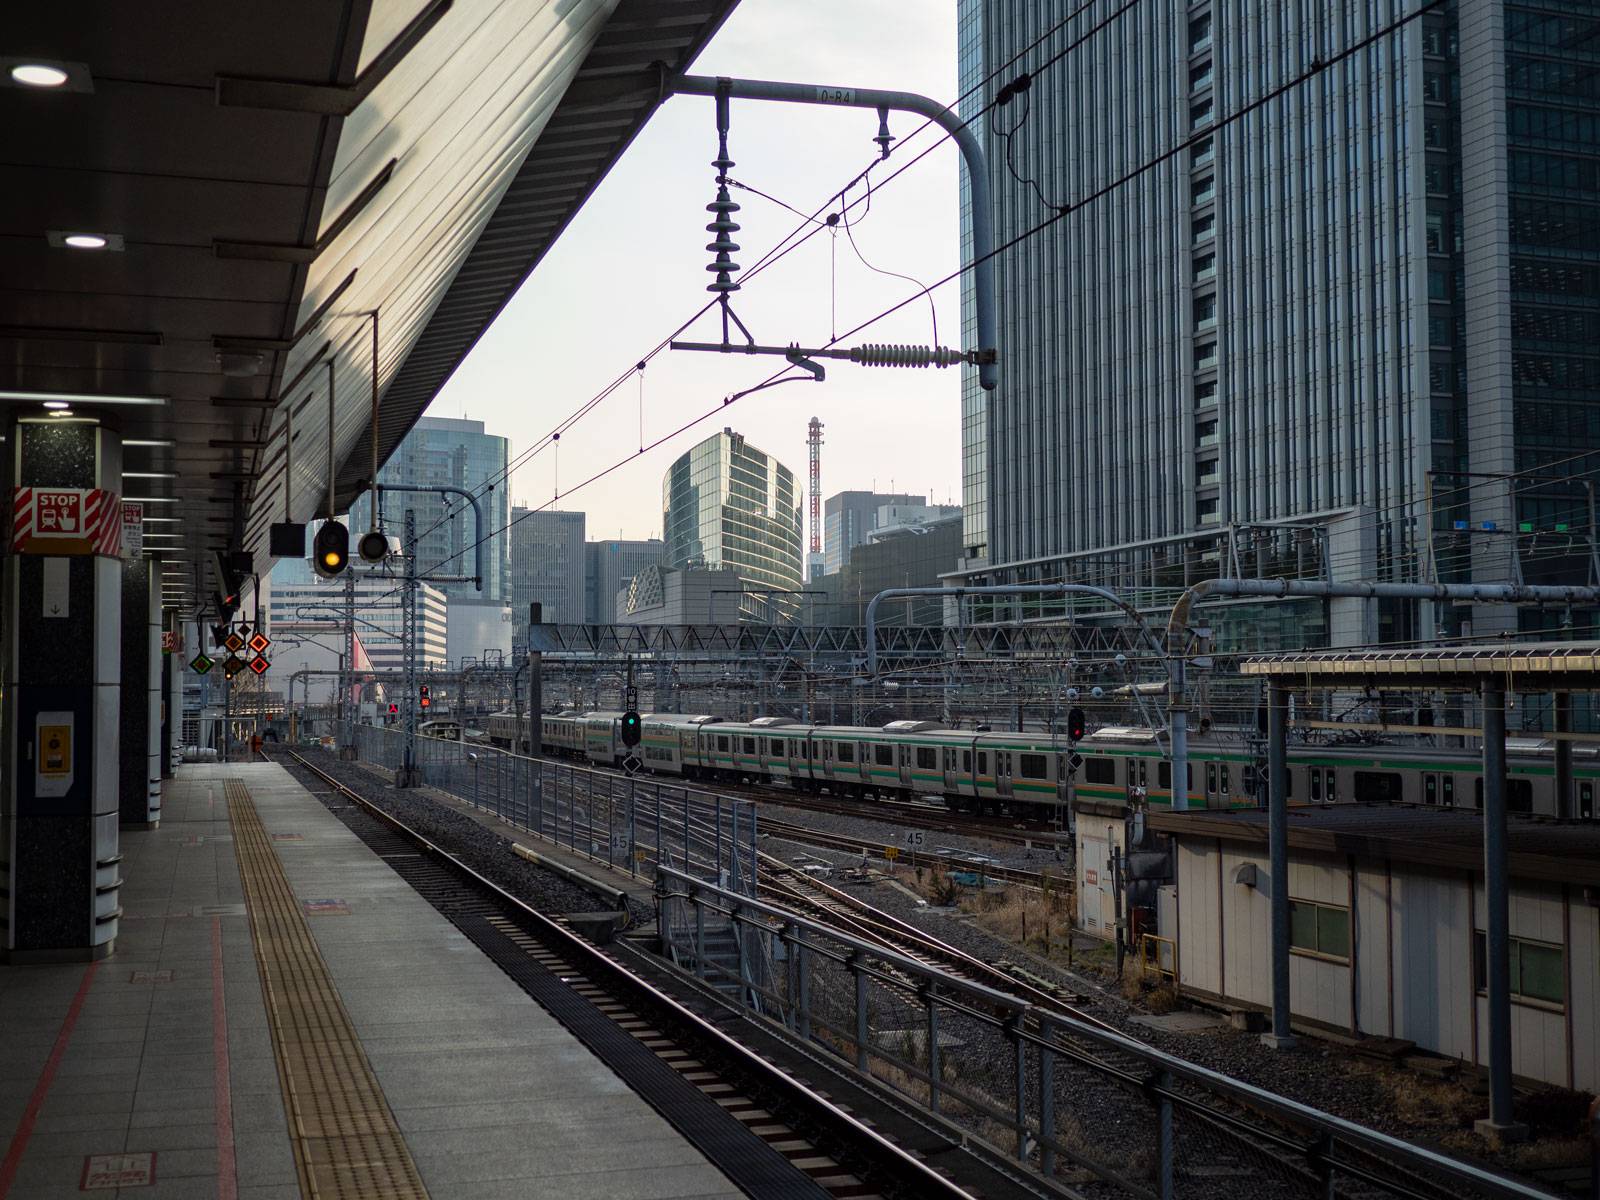 View of the Shinkansen train line